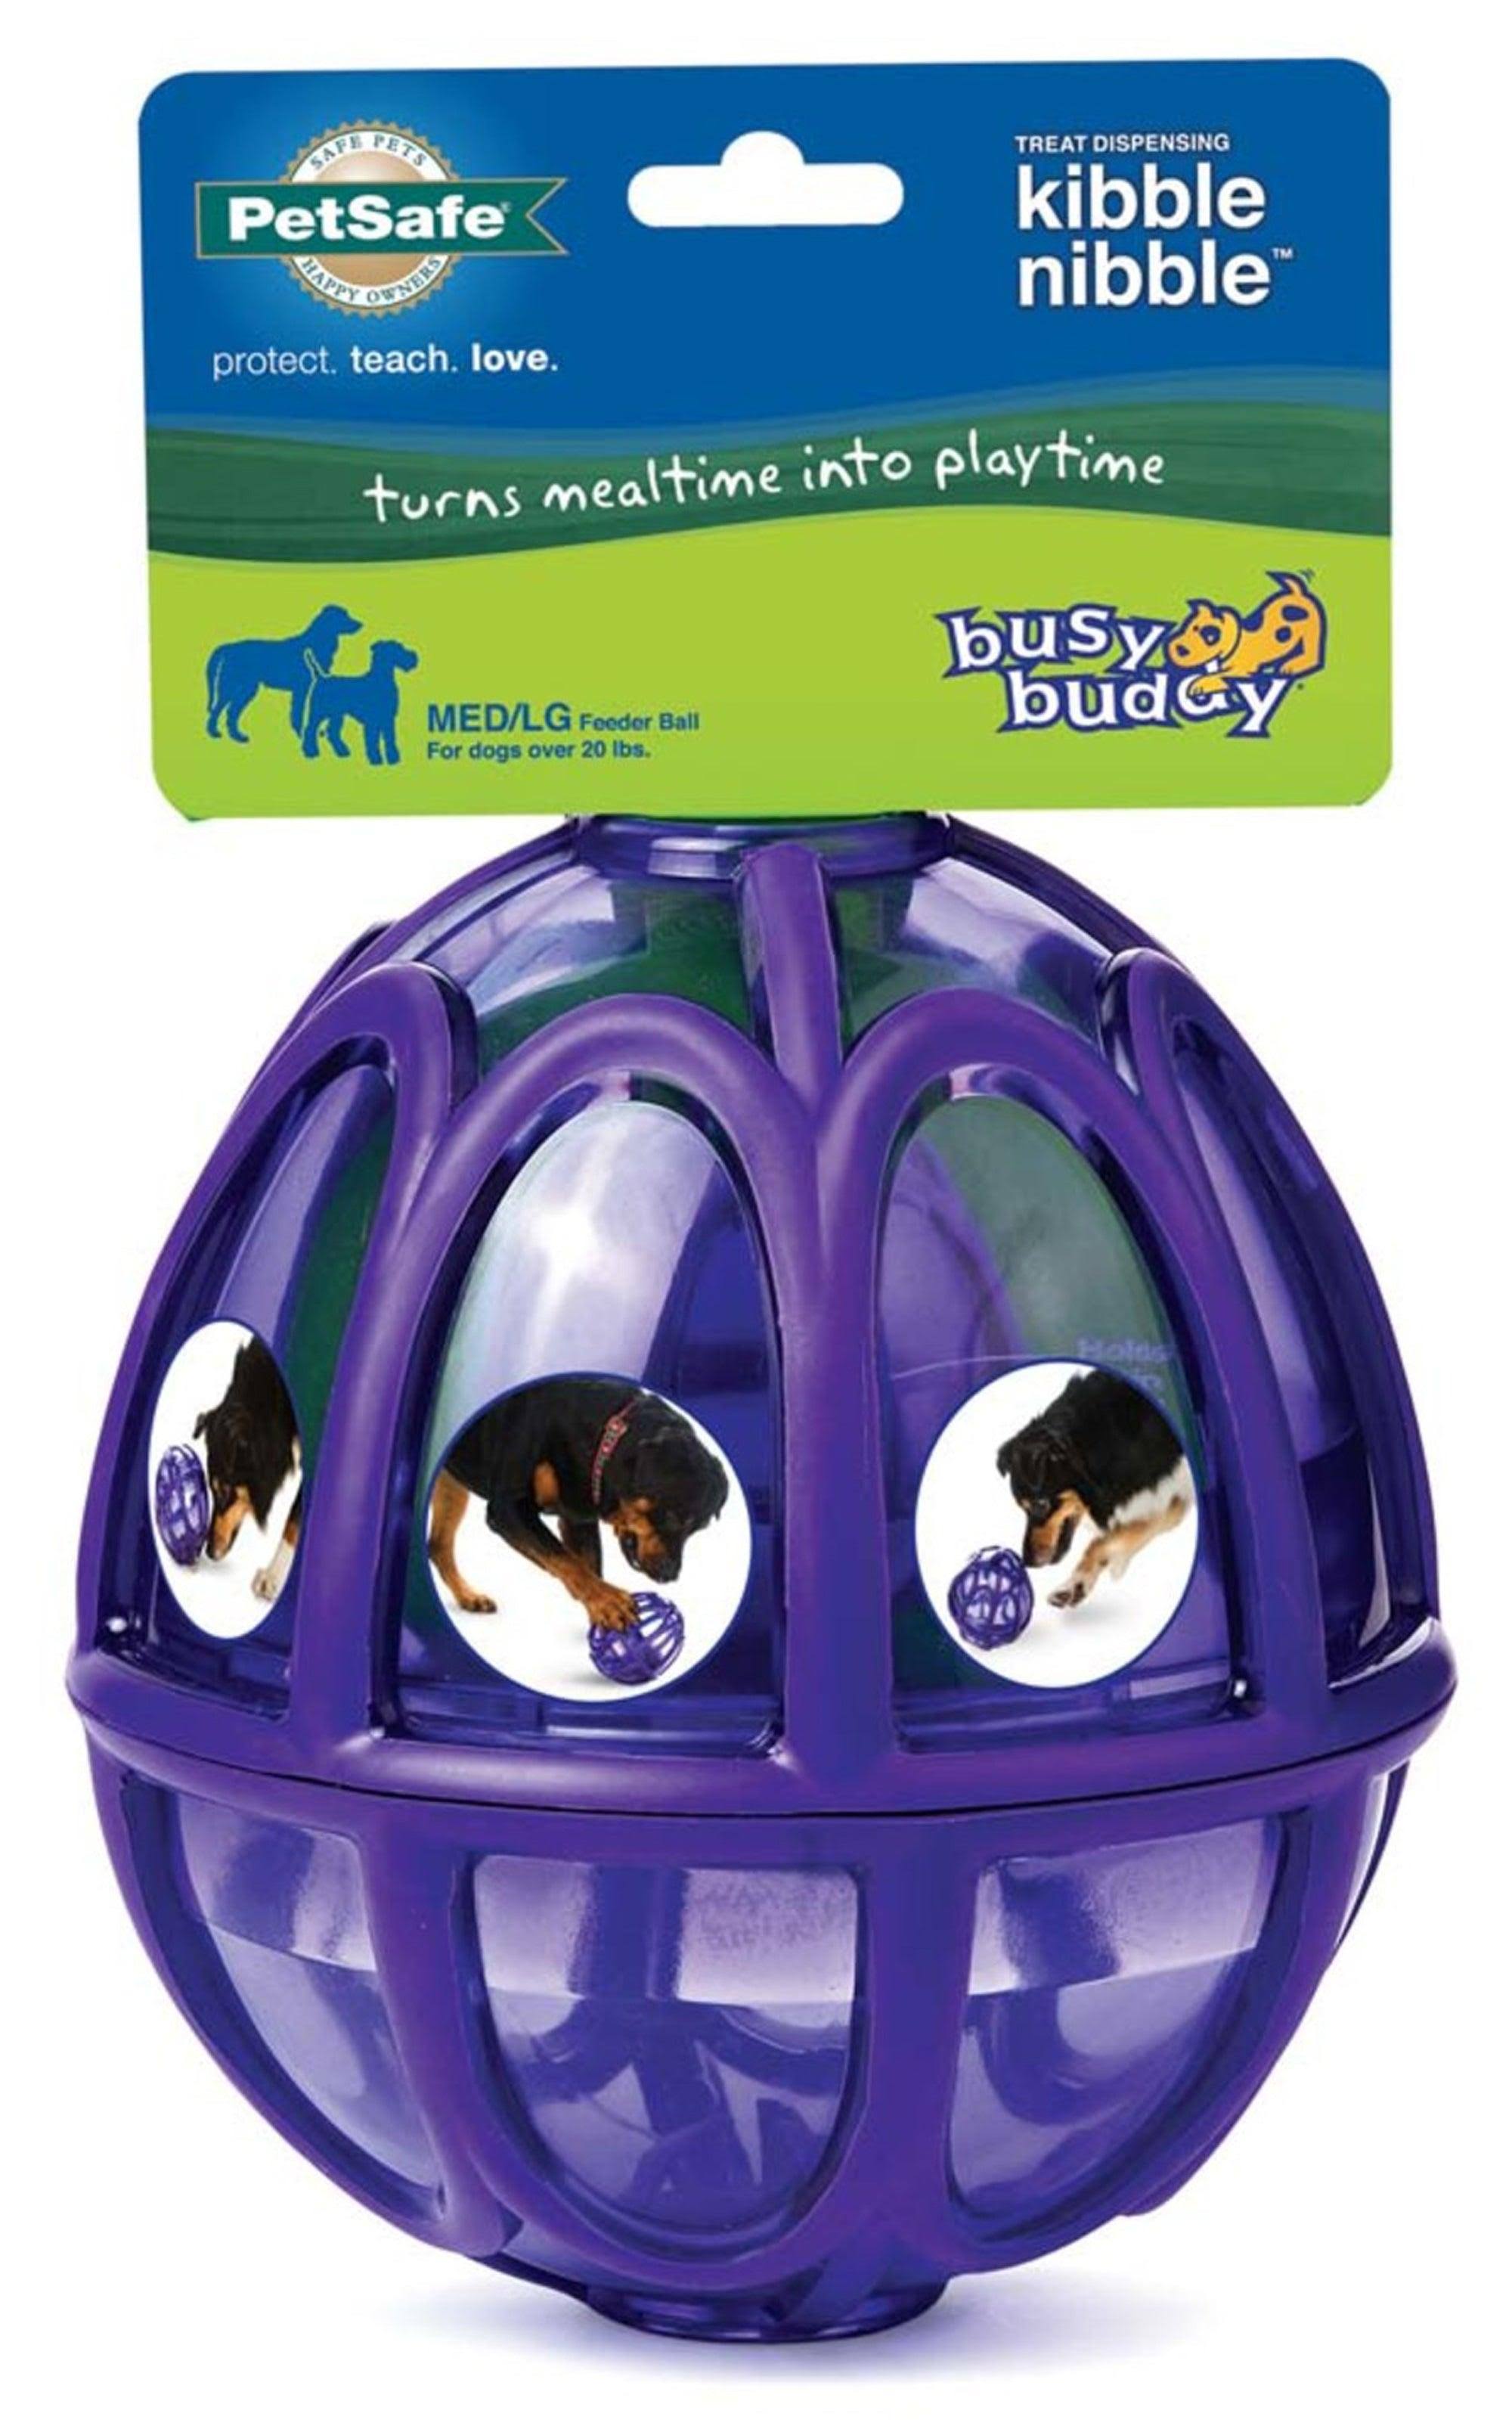 Petsafe Premier Busy Buddy Kibble Nibble Dog Toy